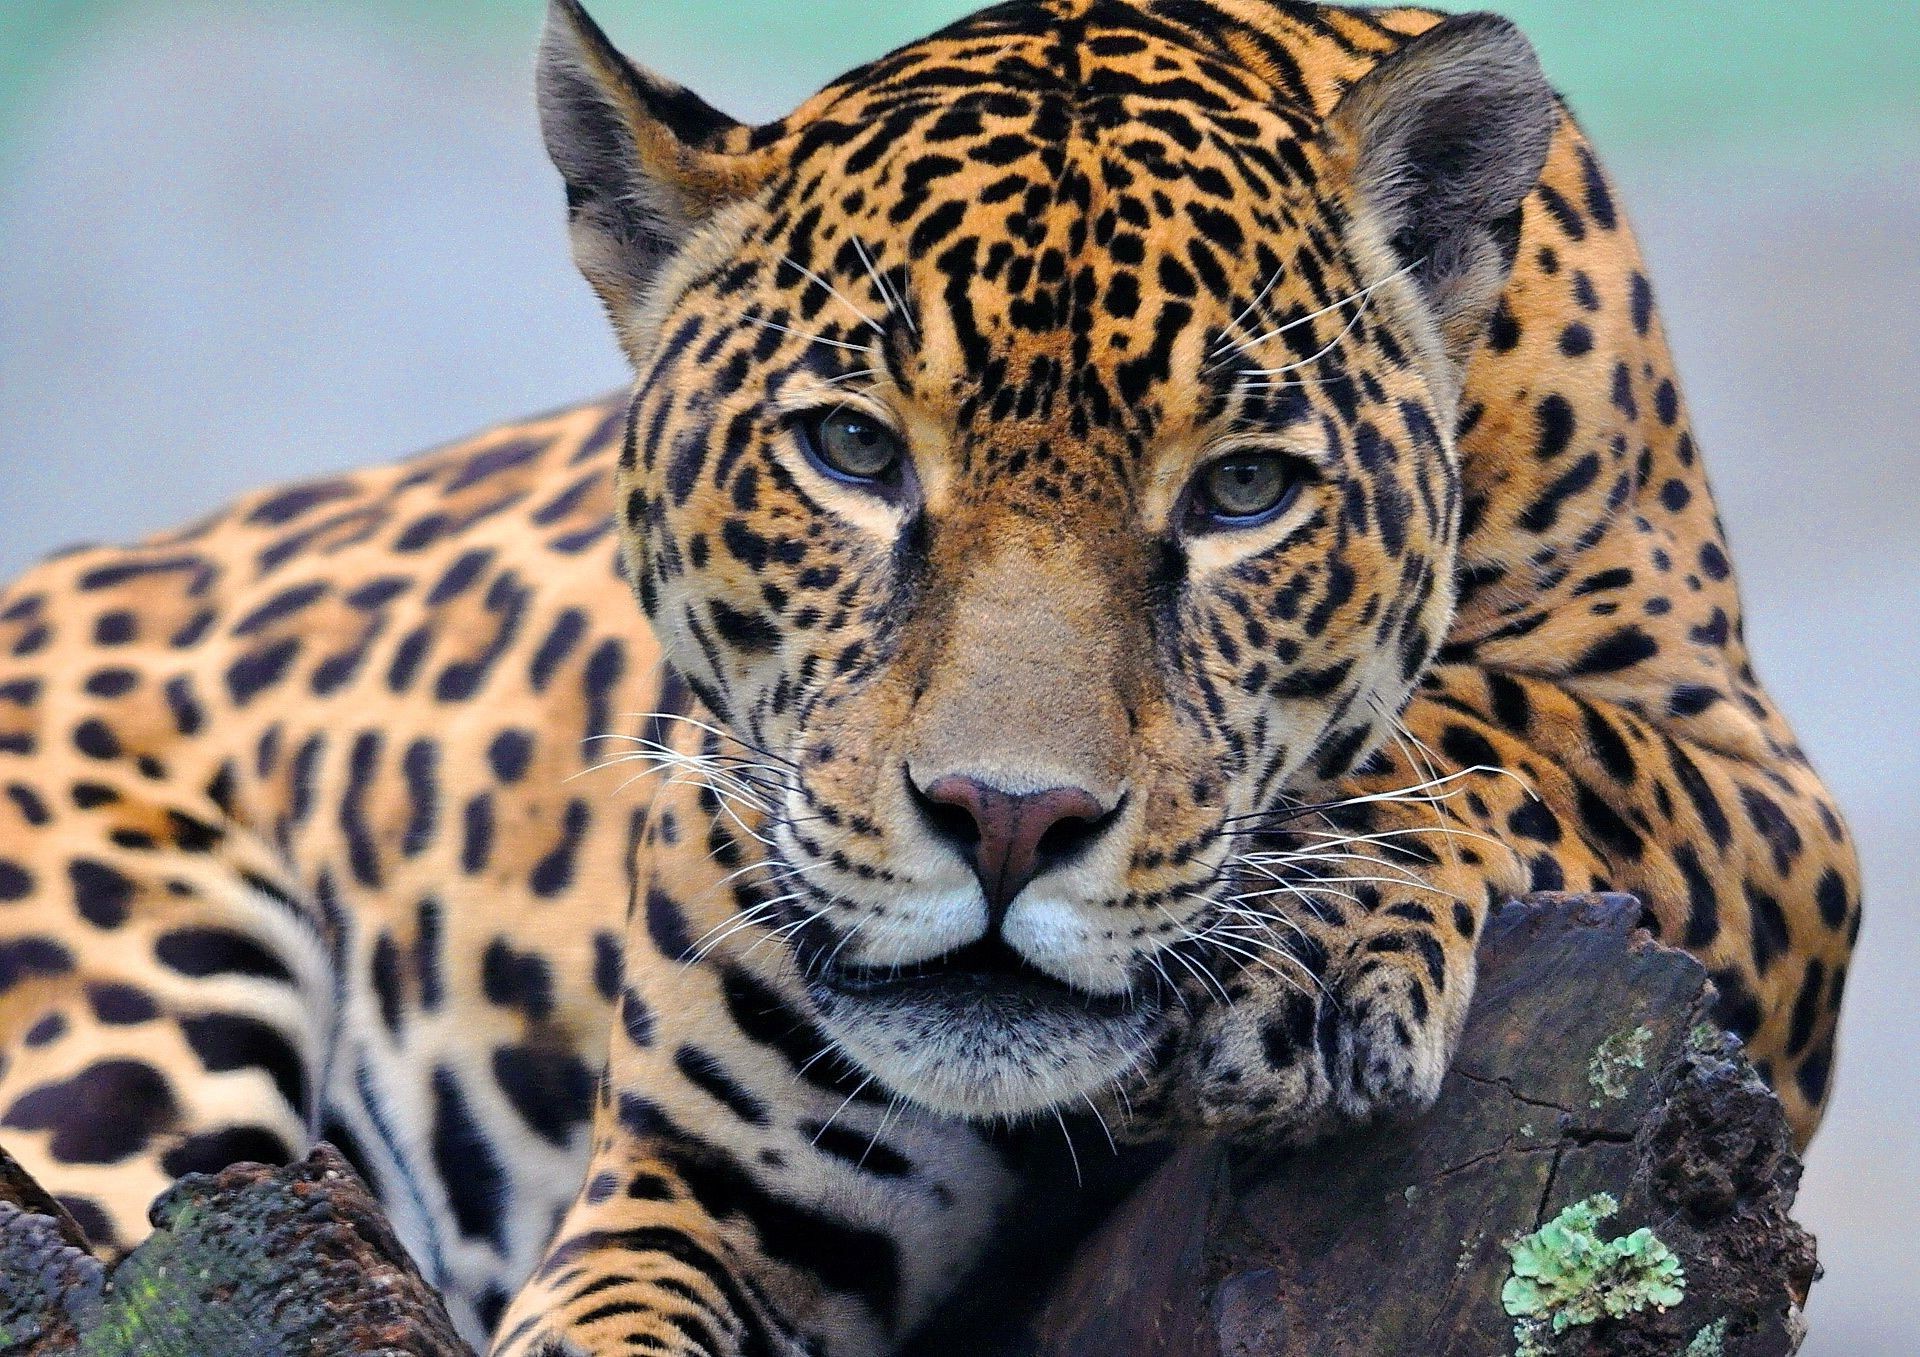 animals cat wildlife leopard mammal zoo predator animal safari jungle tiger carnivore hunter fur wild big hunt